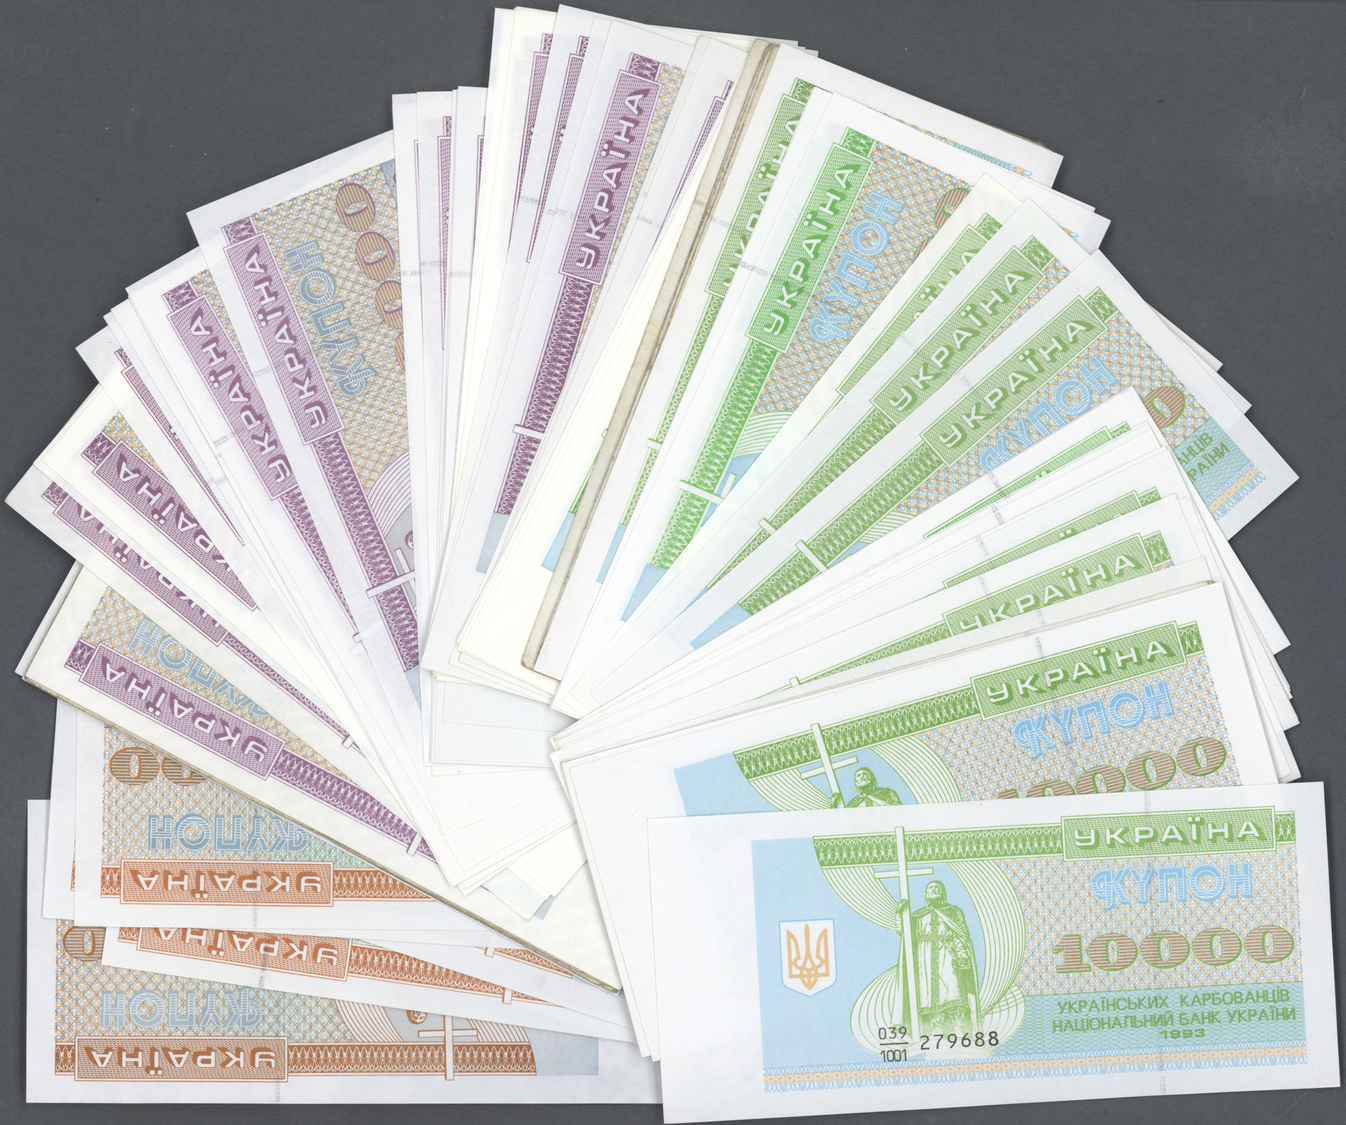 03750 Ukraina / Ukraine: huge set with 337 Banknotes of the Ukrainian National Bank issues 1991 - 1995, containing 27 x